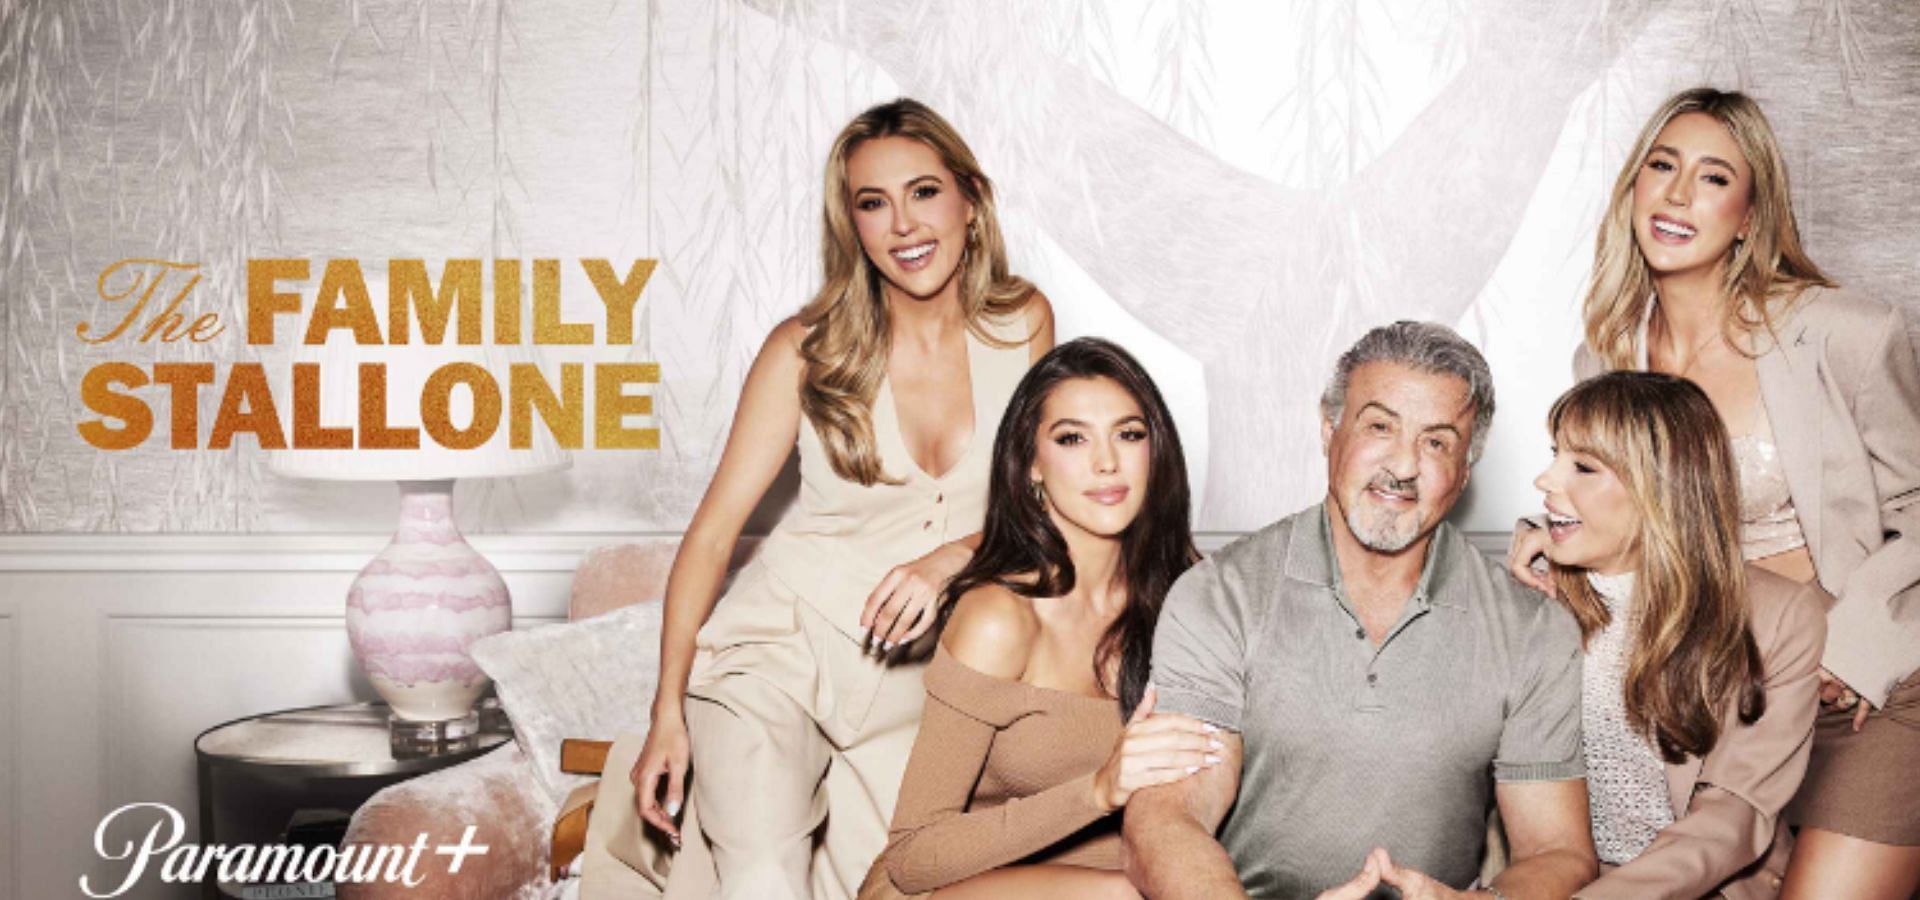 The Family Stallone (Image via Paramount)